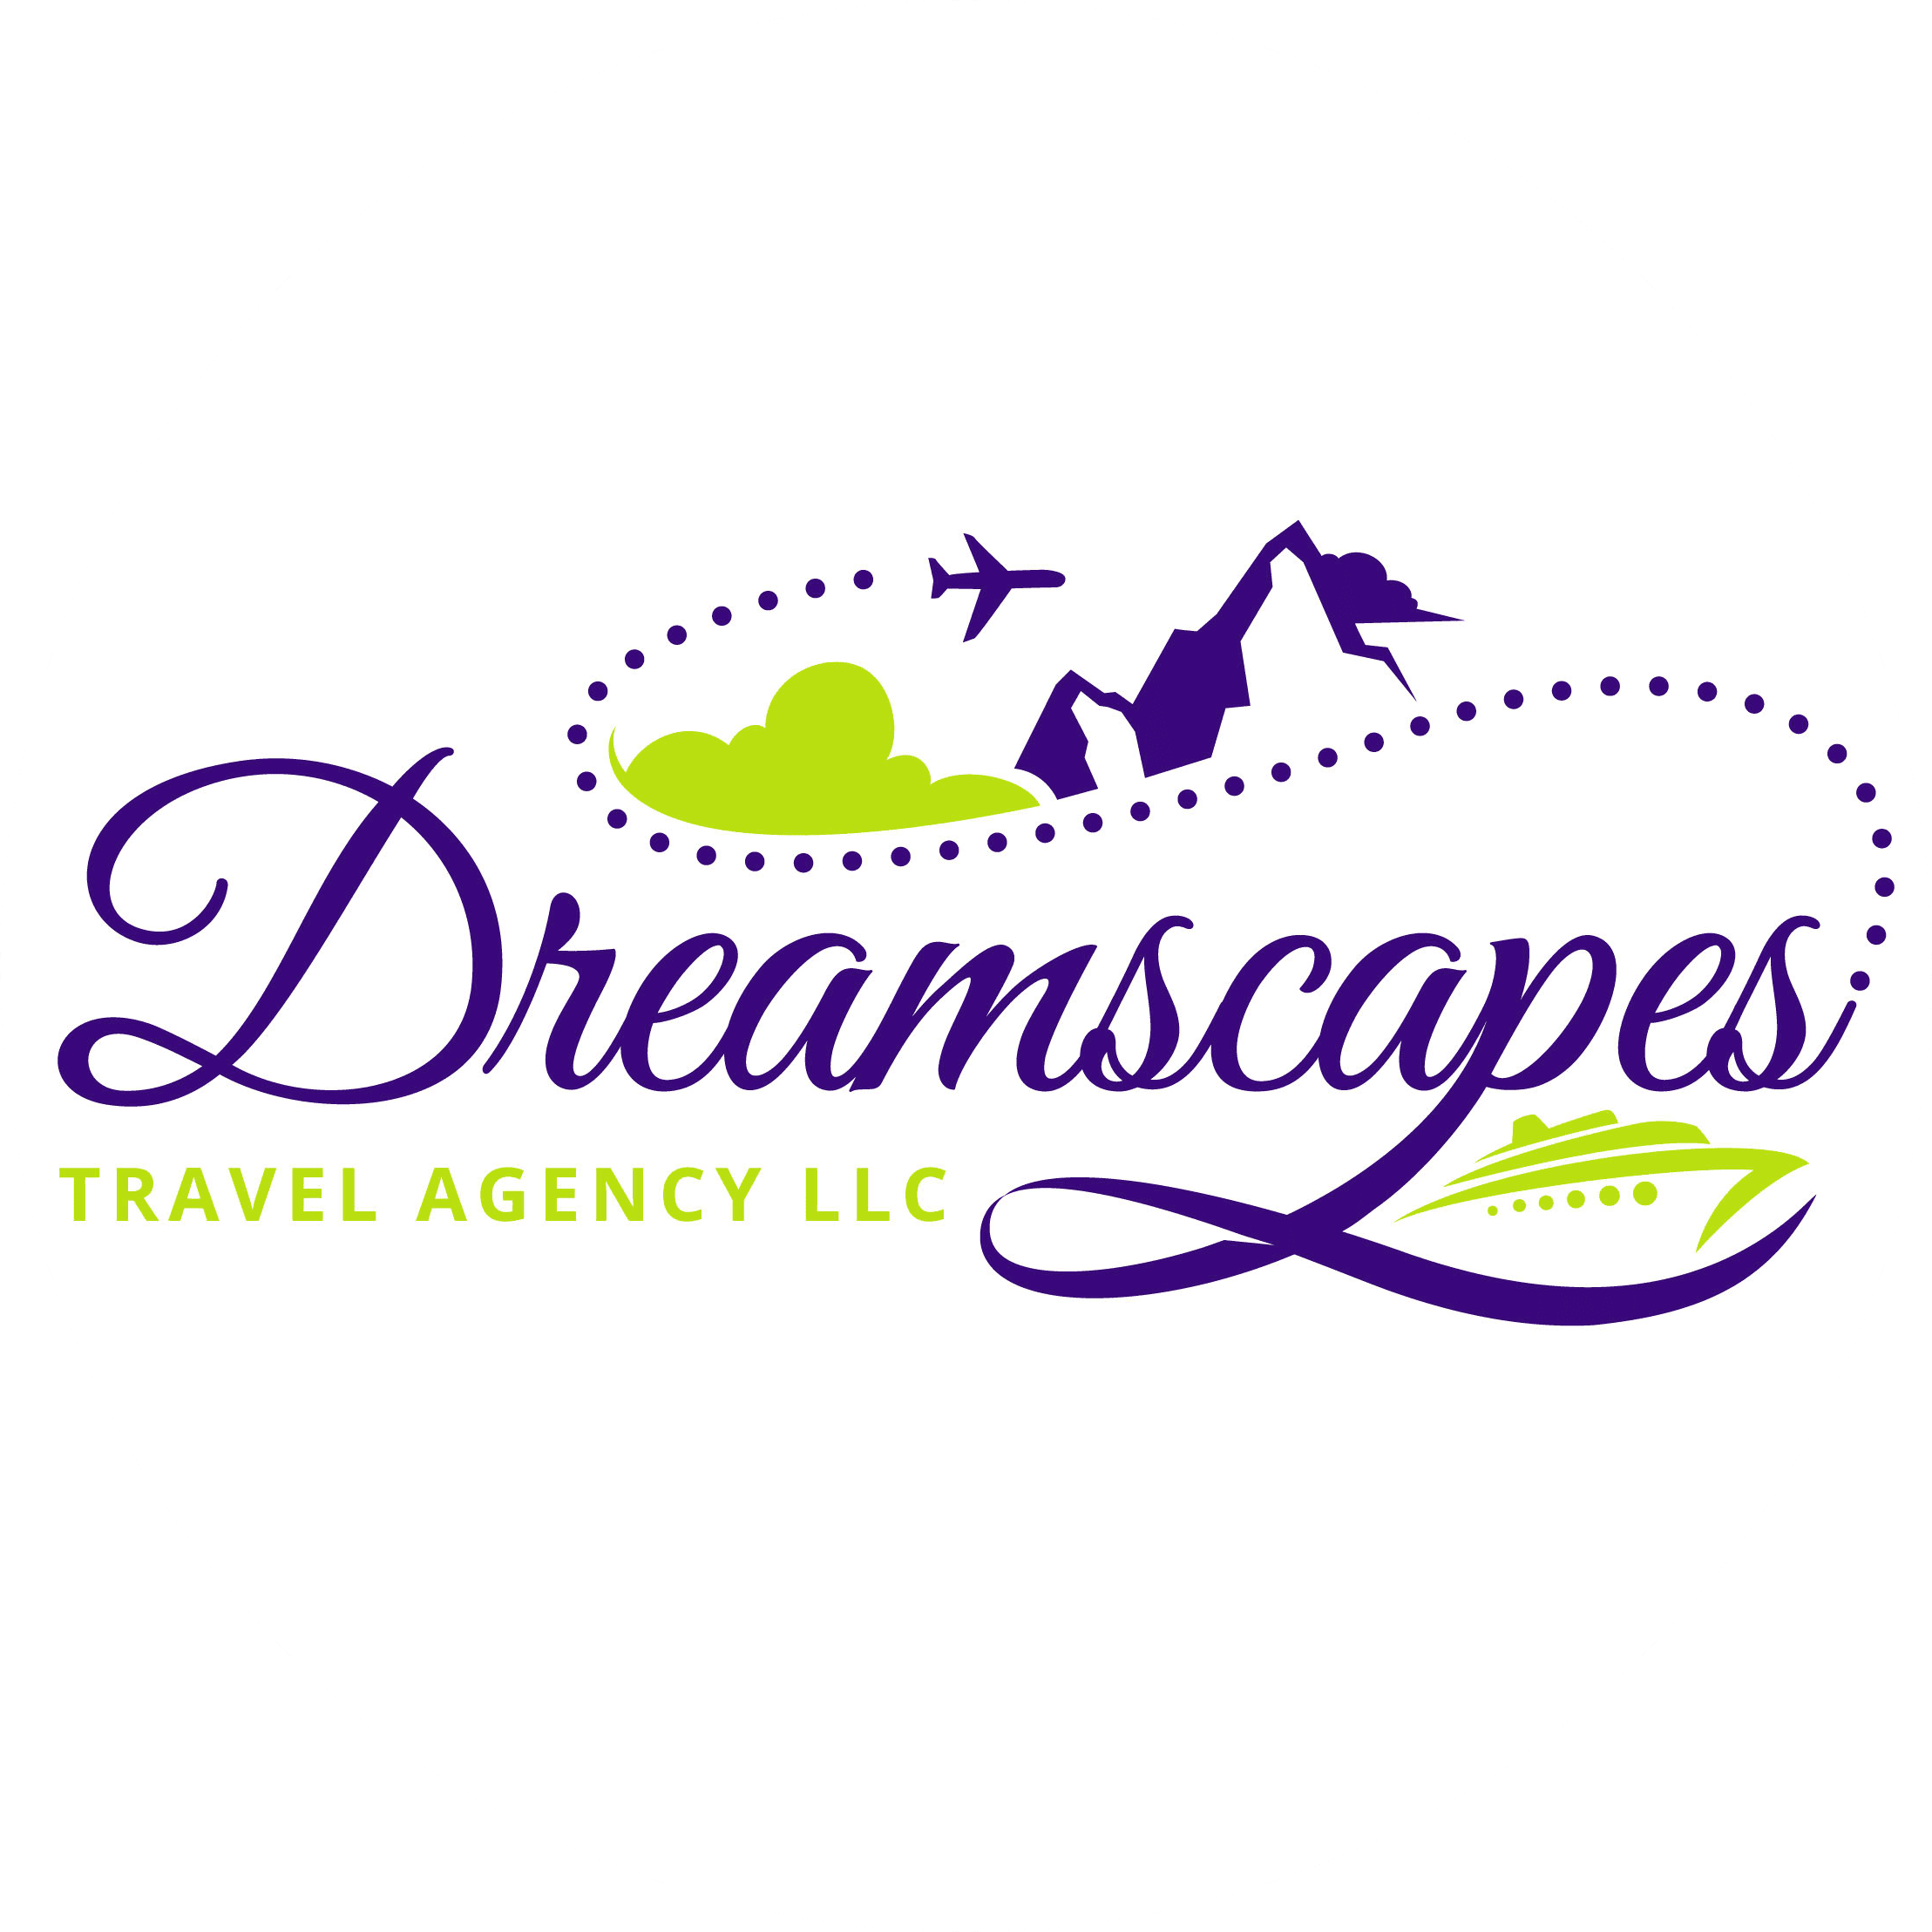 Dreamscapes Travel Agency, LLC